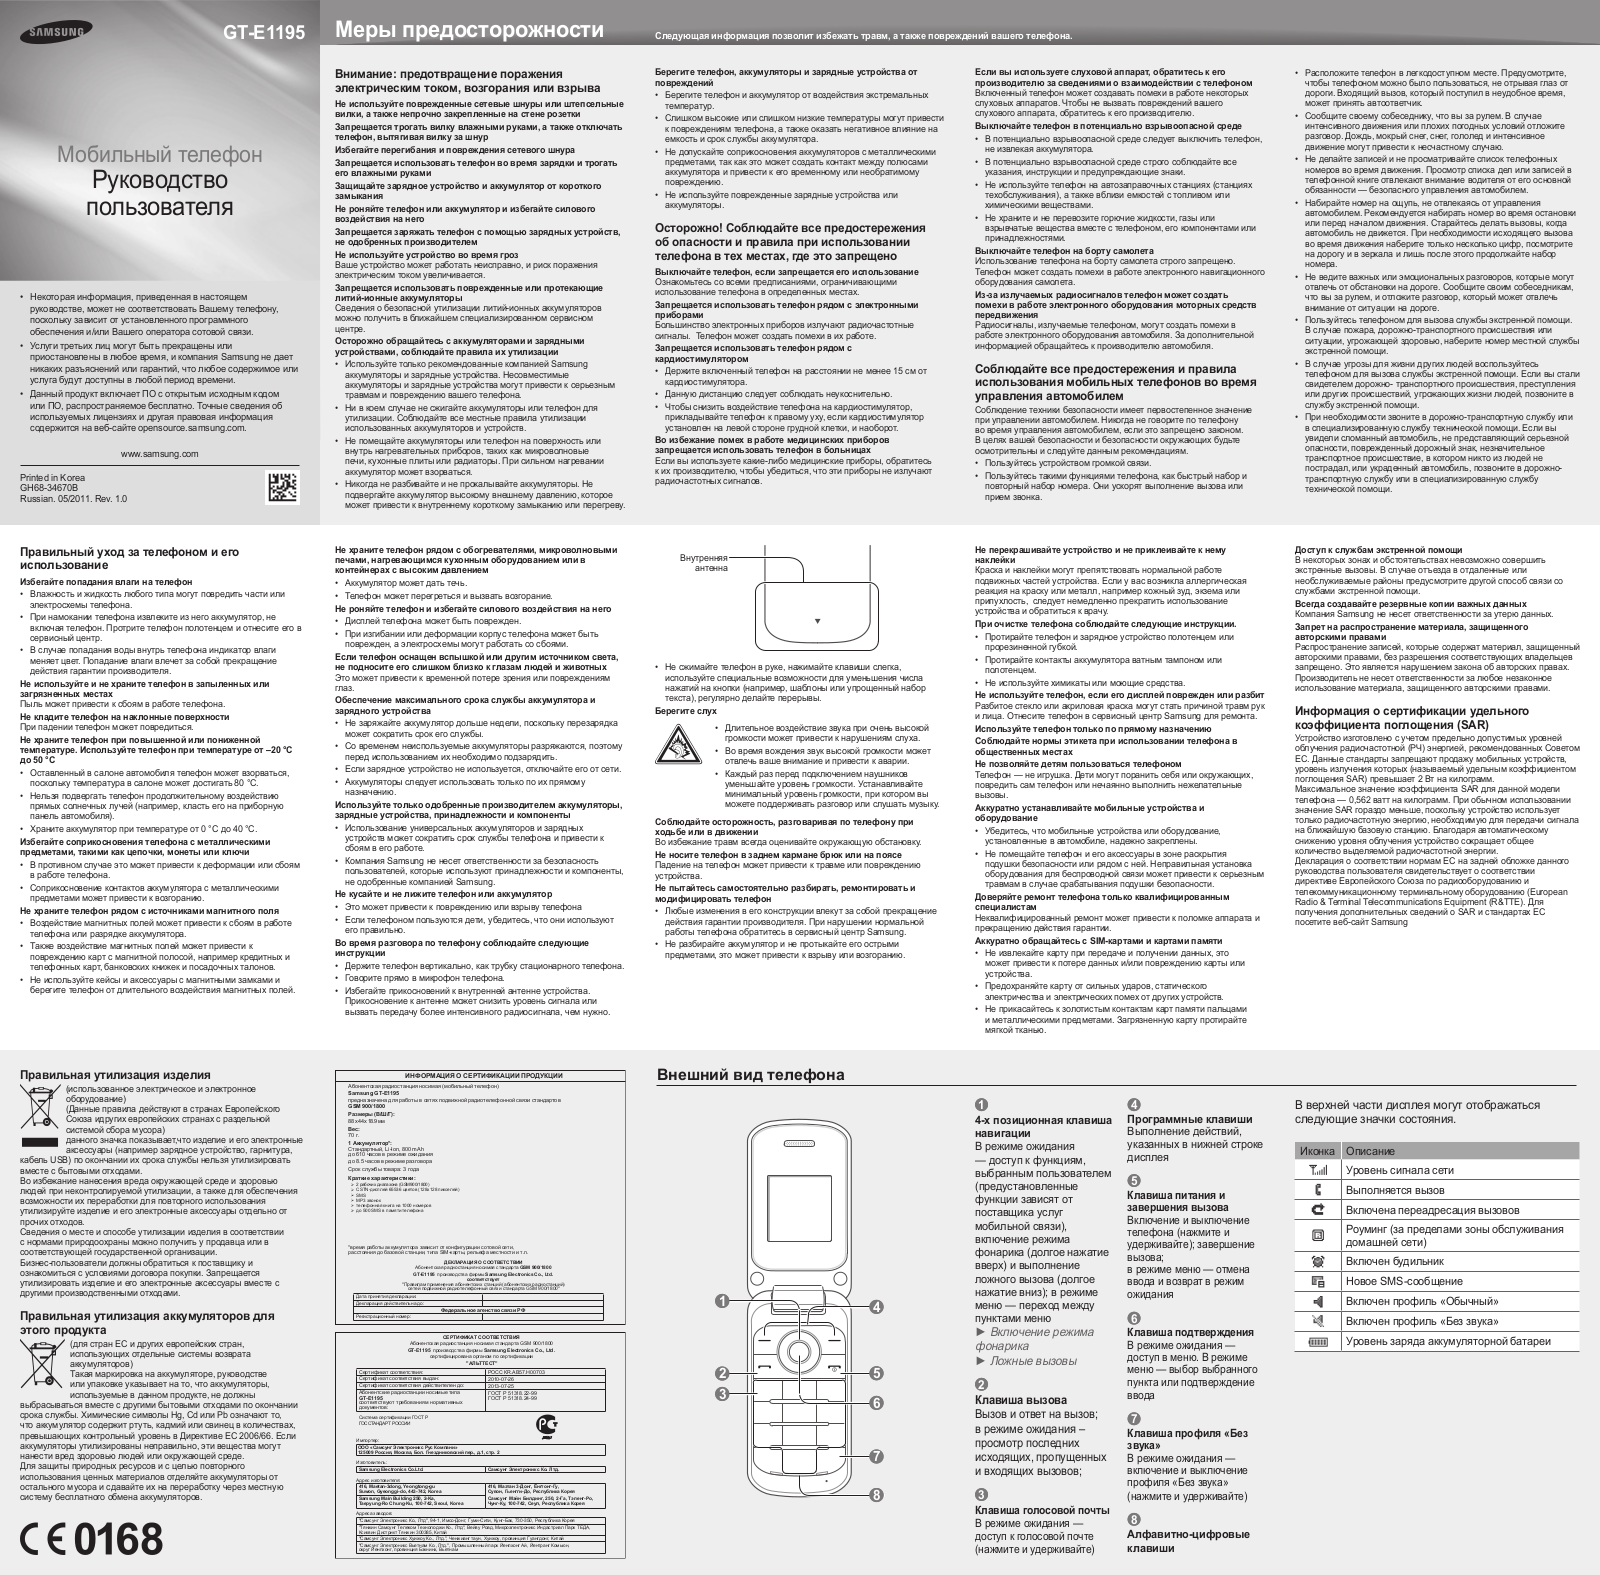 Samsung GT-E1195 User Manual